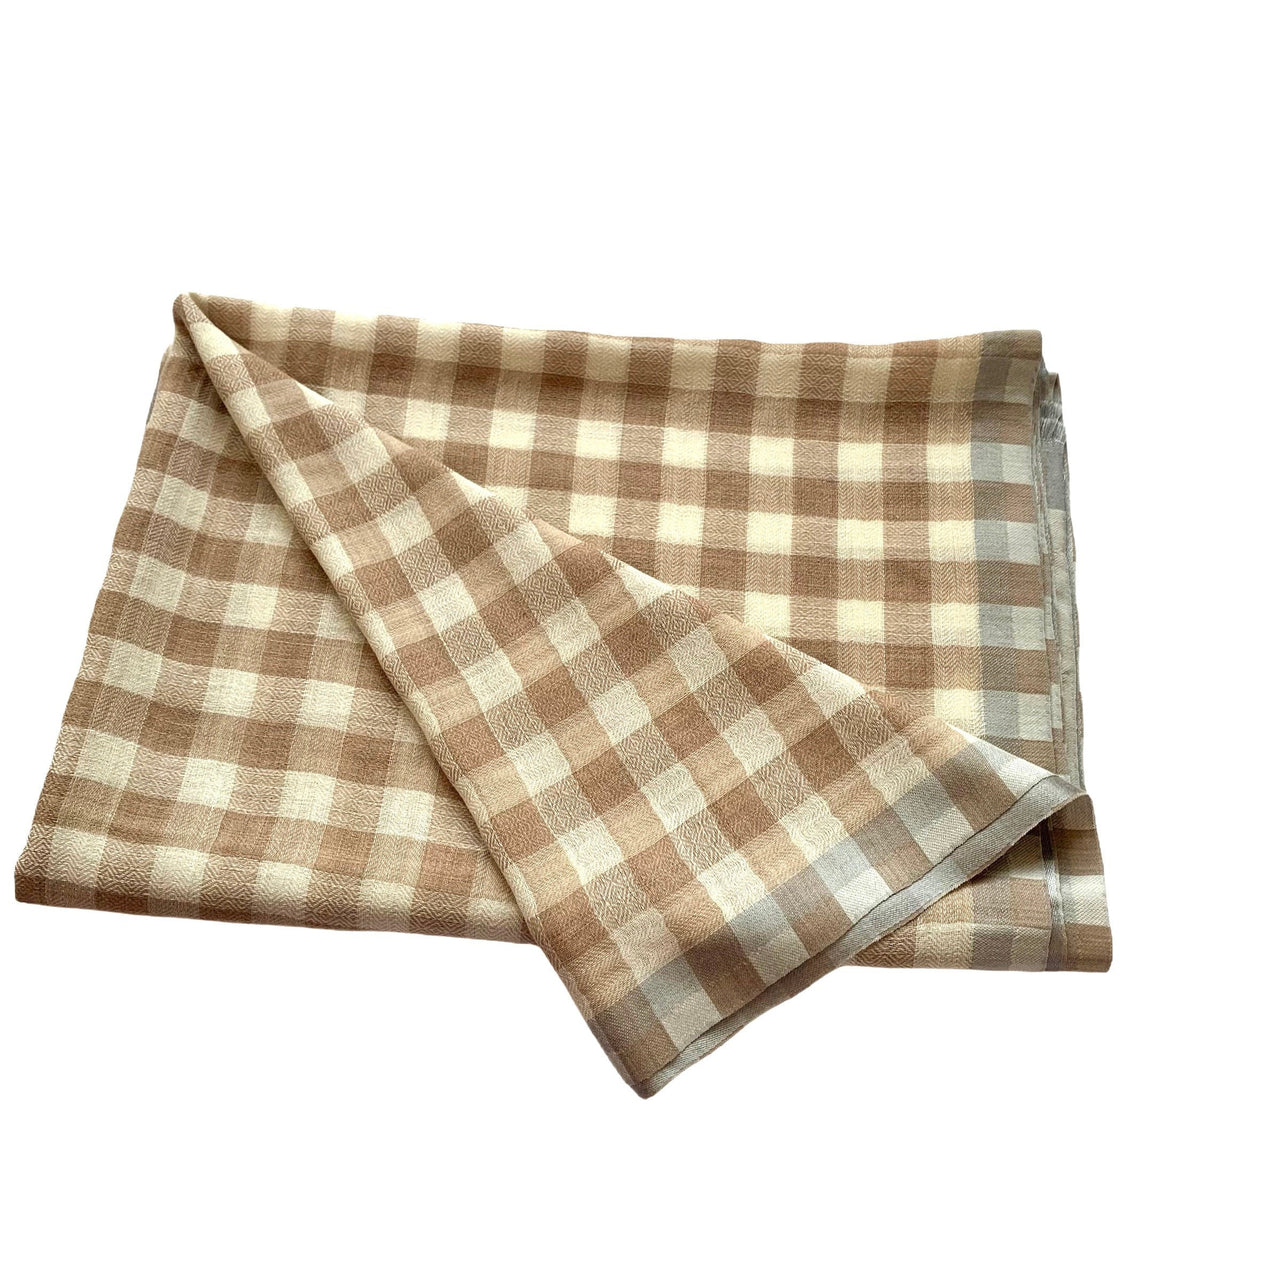 Stunning Unisex Reversible Checkered Wool Pashmina Scarf/Shawl/Wrap/Stole